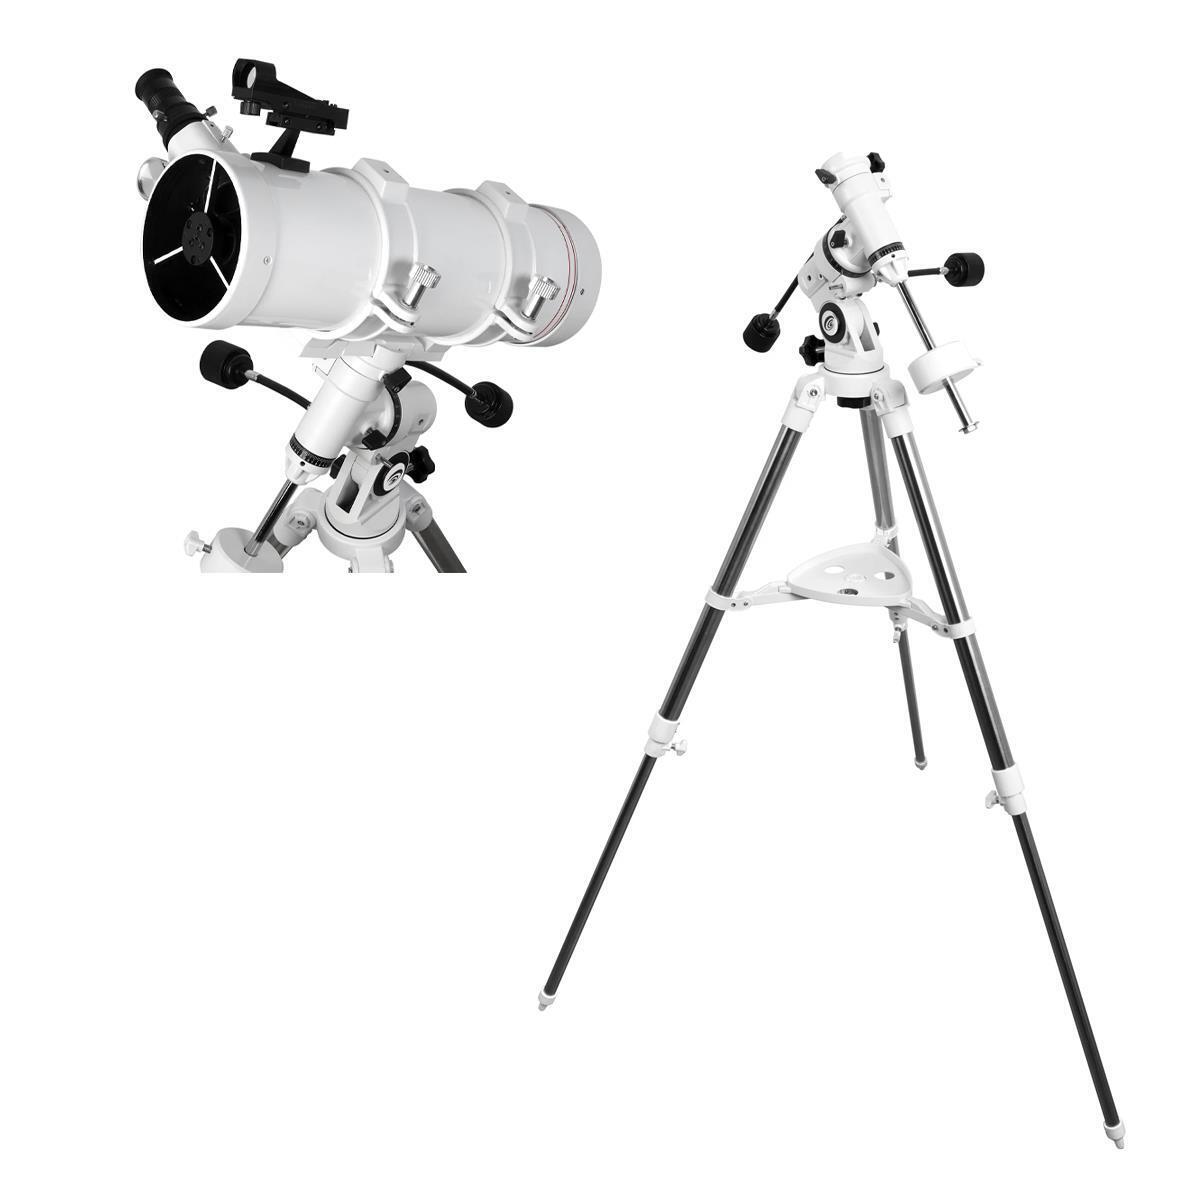 Explore Scientific FirstLight 114mm f/4.3 Reflector Telescope with EQ3 Mount